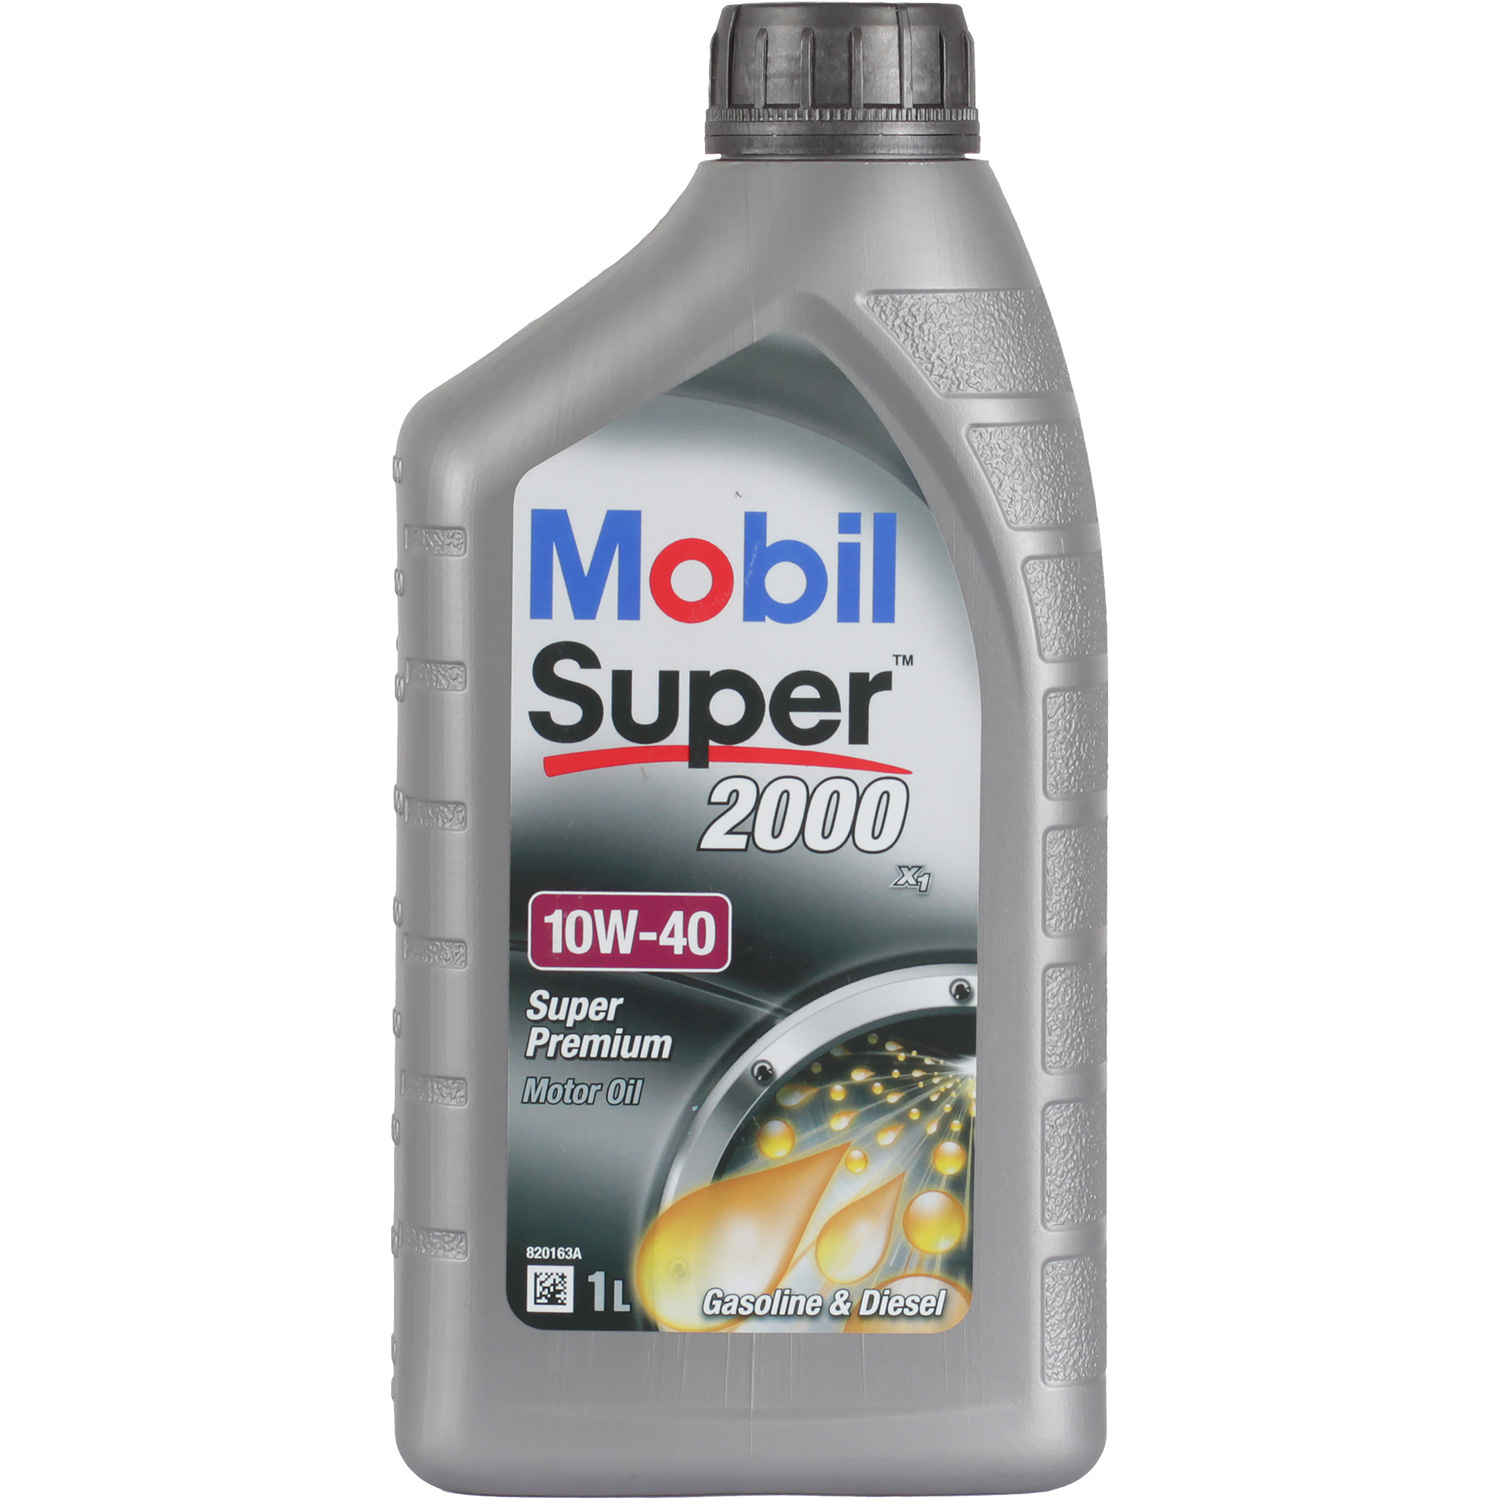 Mobil Моторное масло Mobil Super 2000 X1 10W-40, 1 л масло моторное mobil super 2000x1 10w40 4л